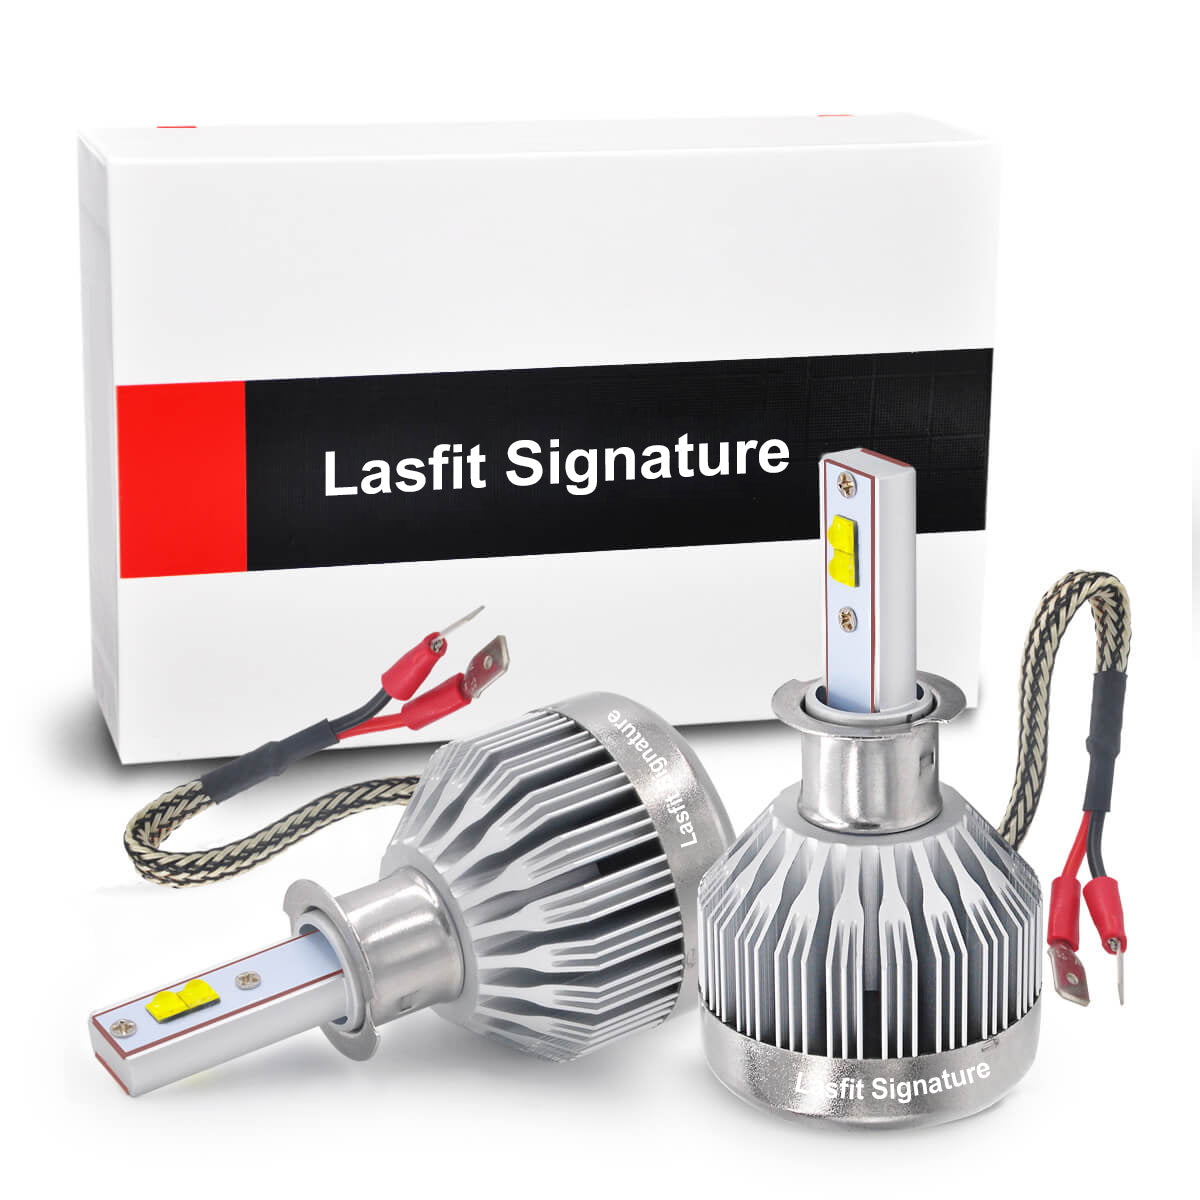 H7 LED Bulb Fog Light Bulb｜LA Plus Series｜LASFIT